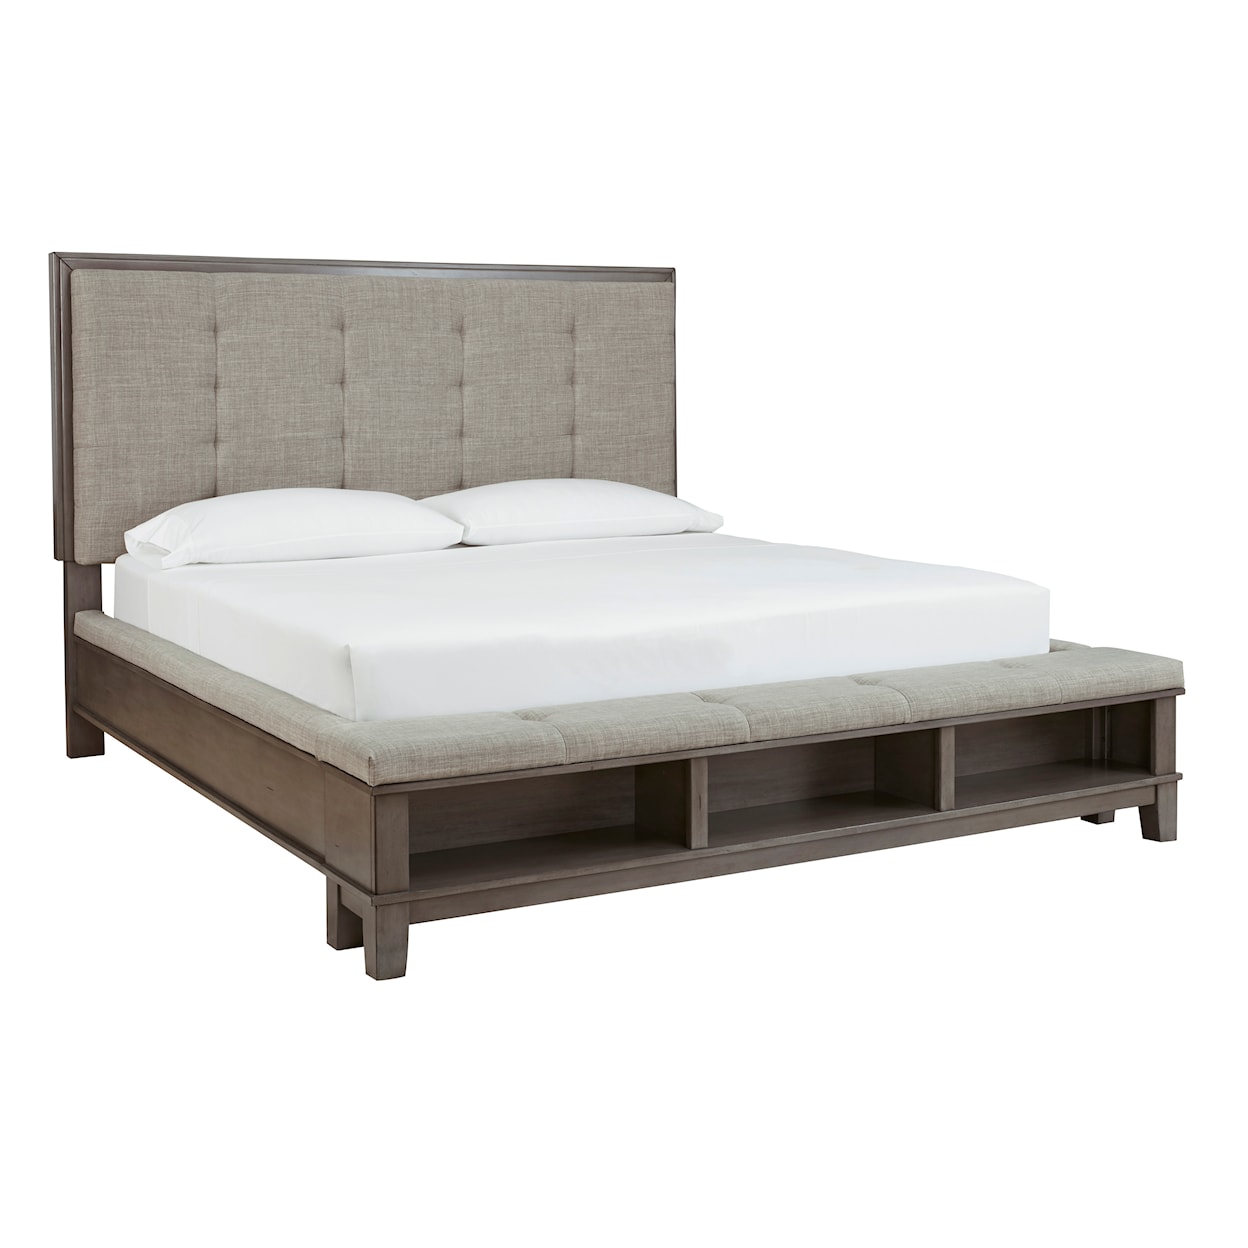 Ashley Furniture Benchcraft Hallanden California King Panel Bed with Storage